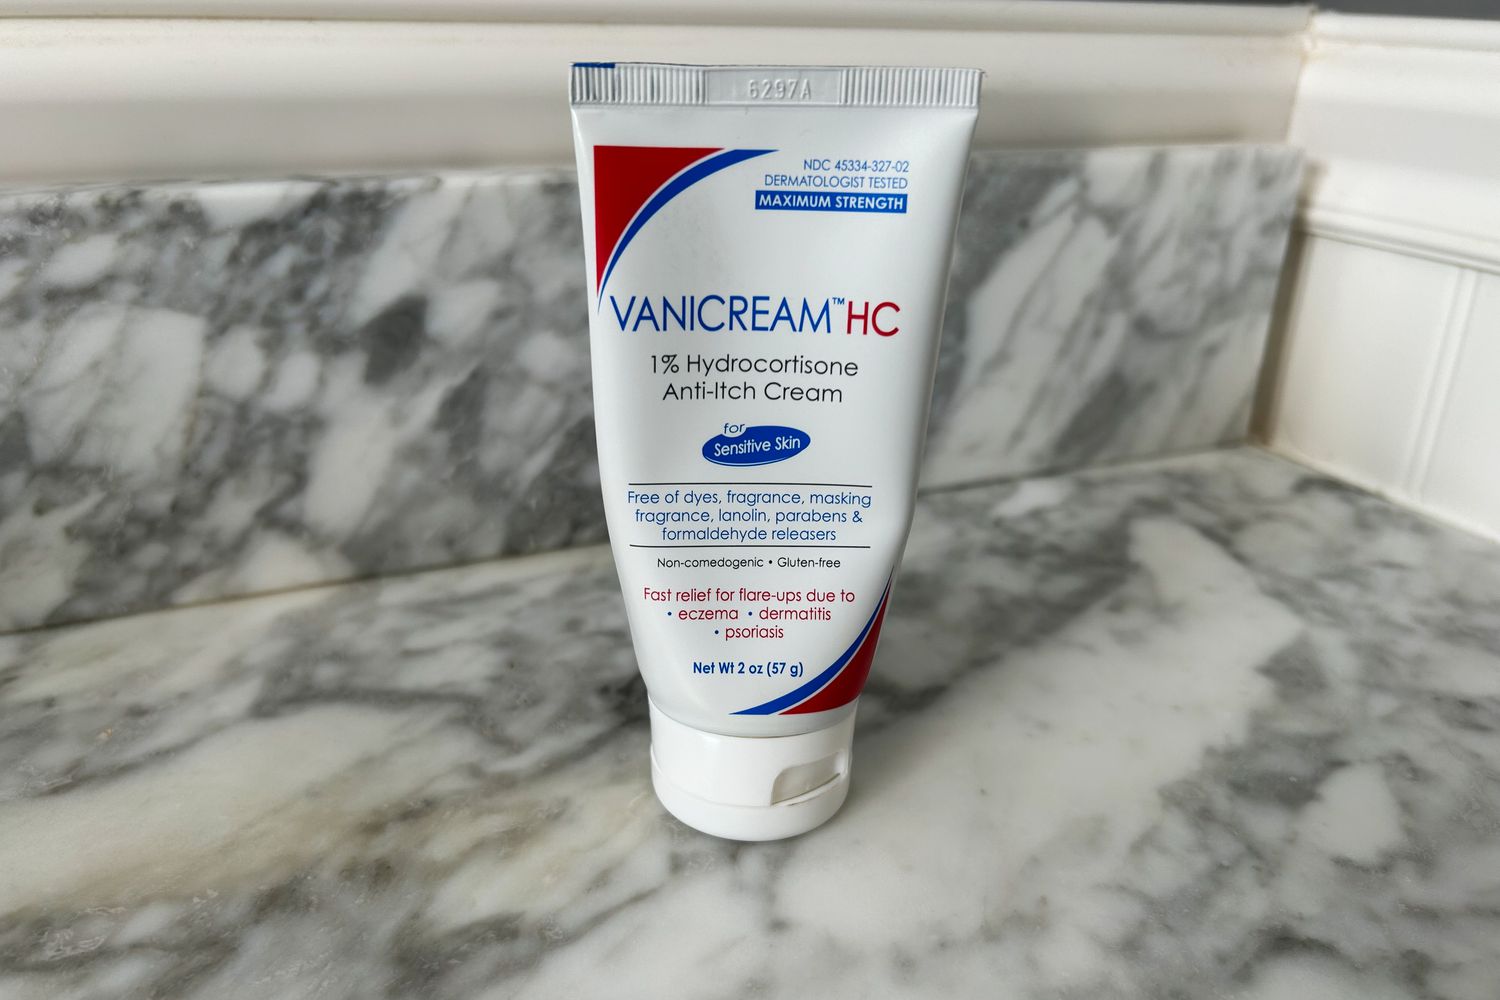 Vanicream HC 1% Hydrocortisone Anti-Itch Cream displayed on a marble countertop